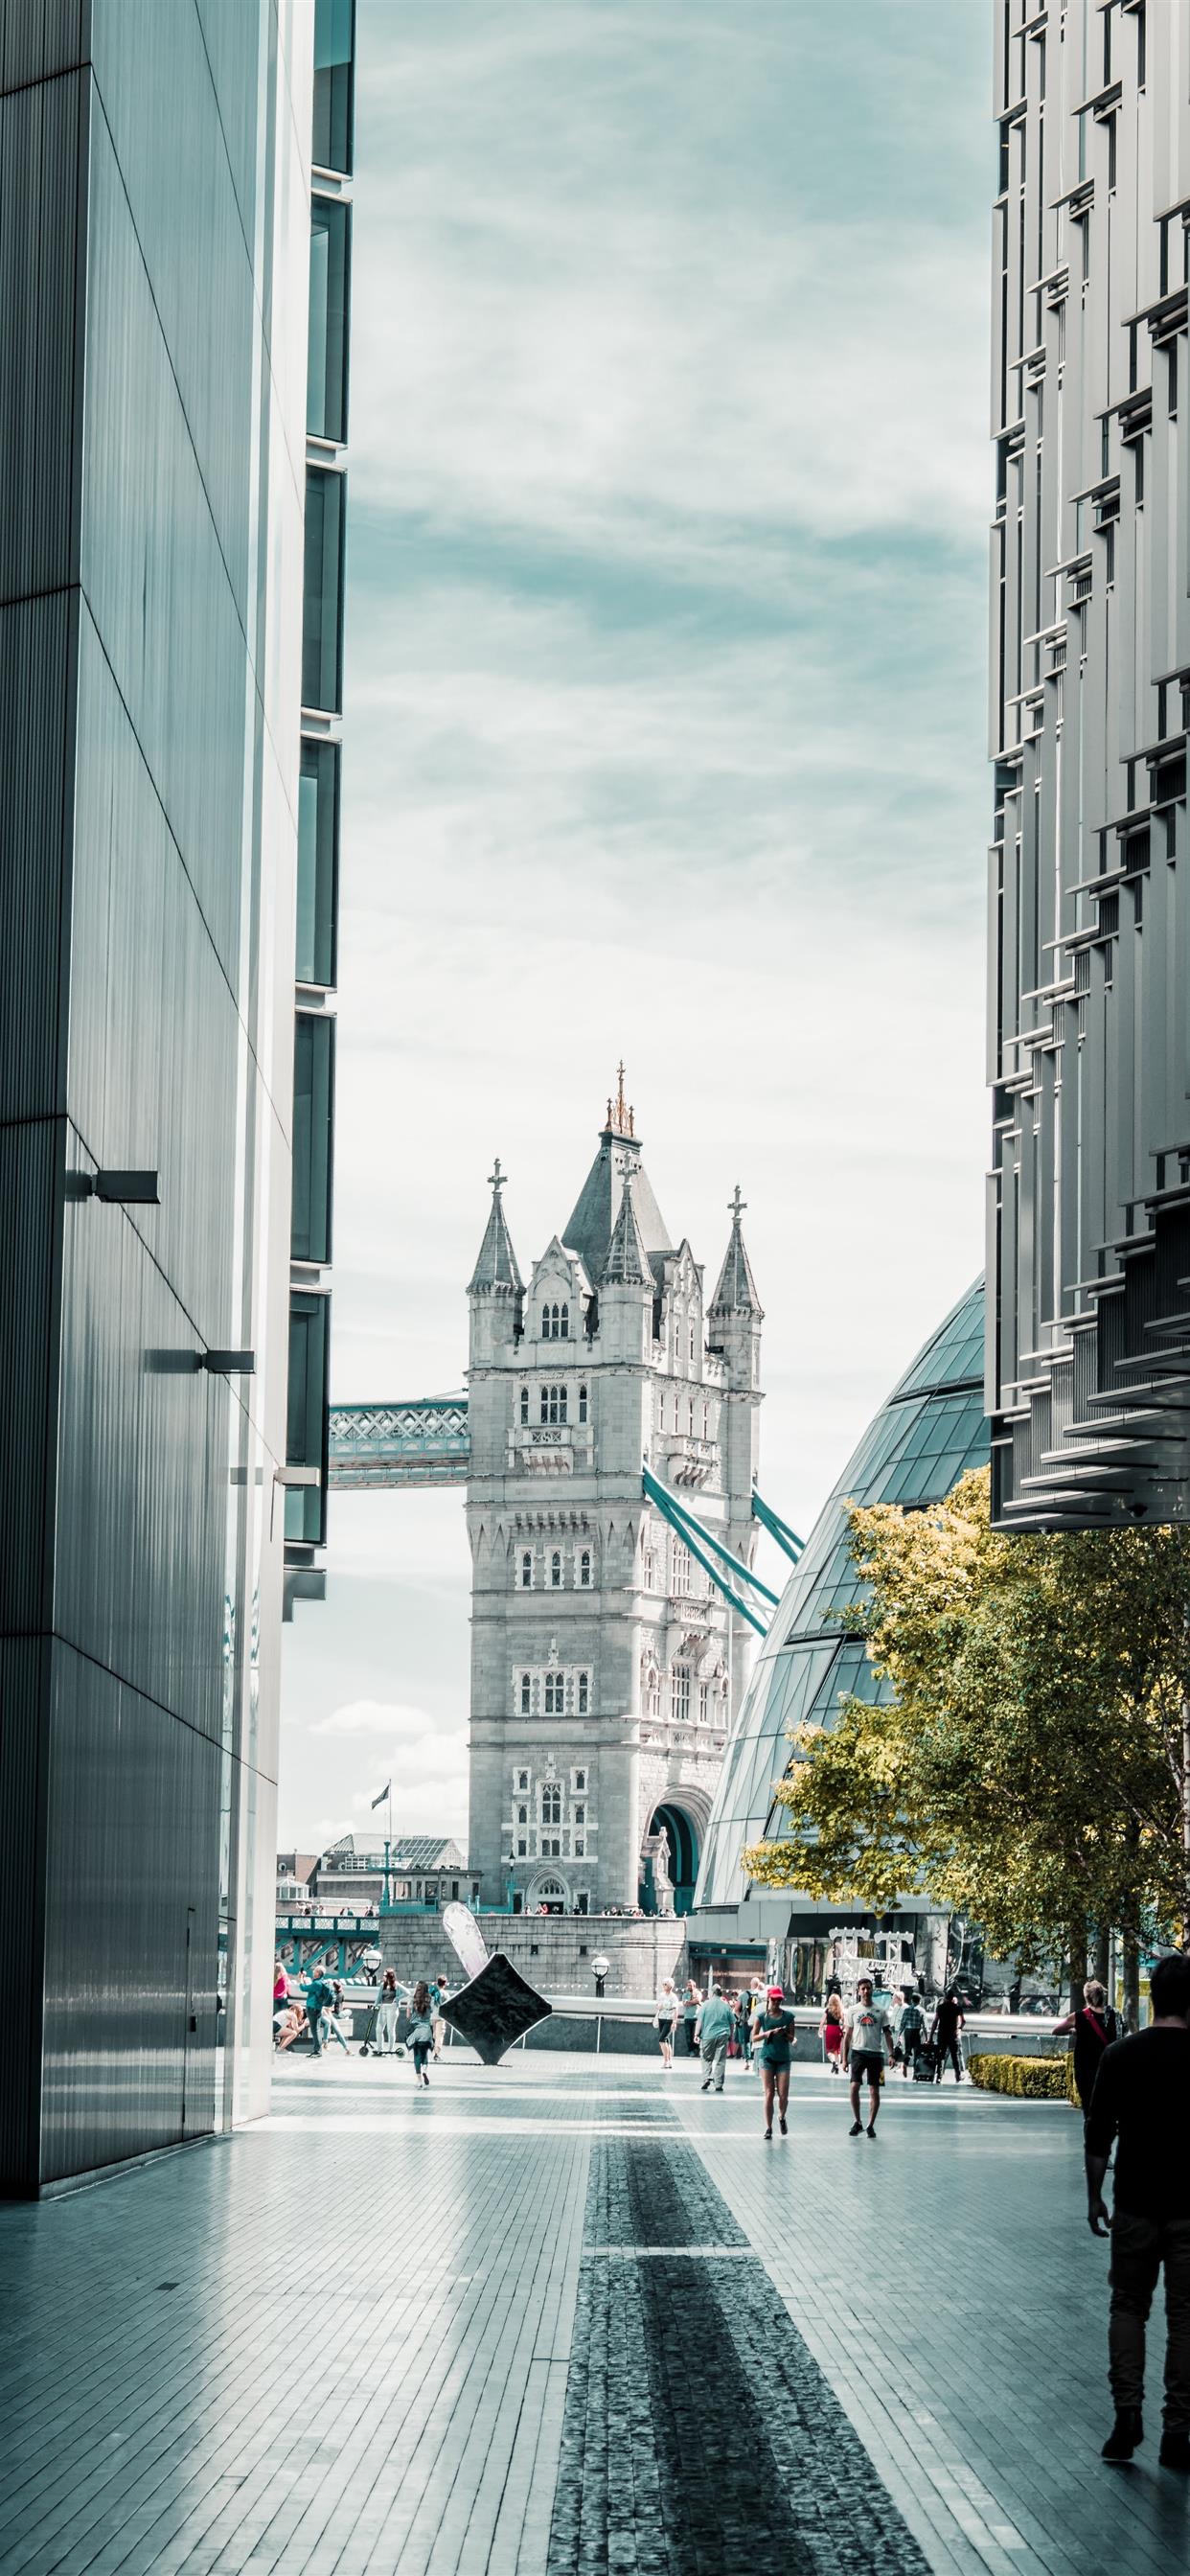 Tower Bridge London England iPhone Wallpaper Free Download